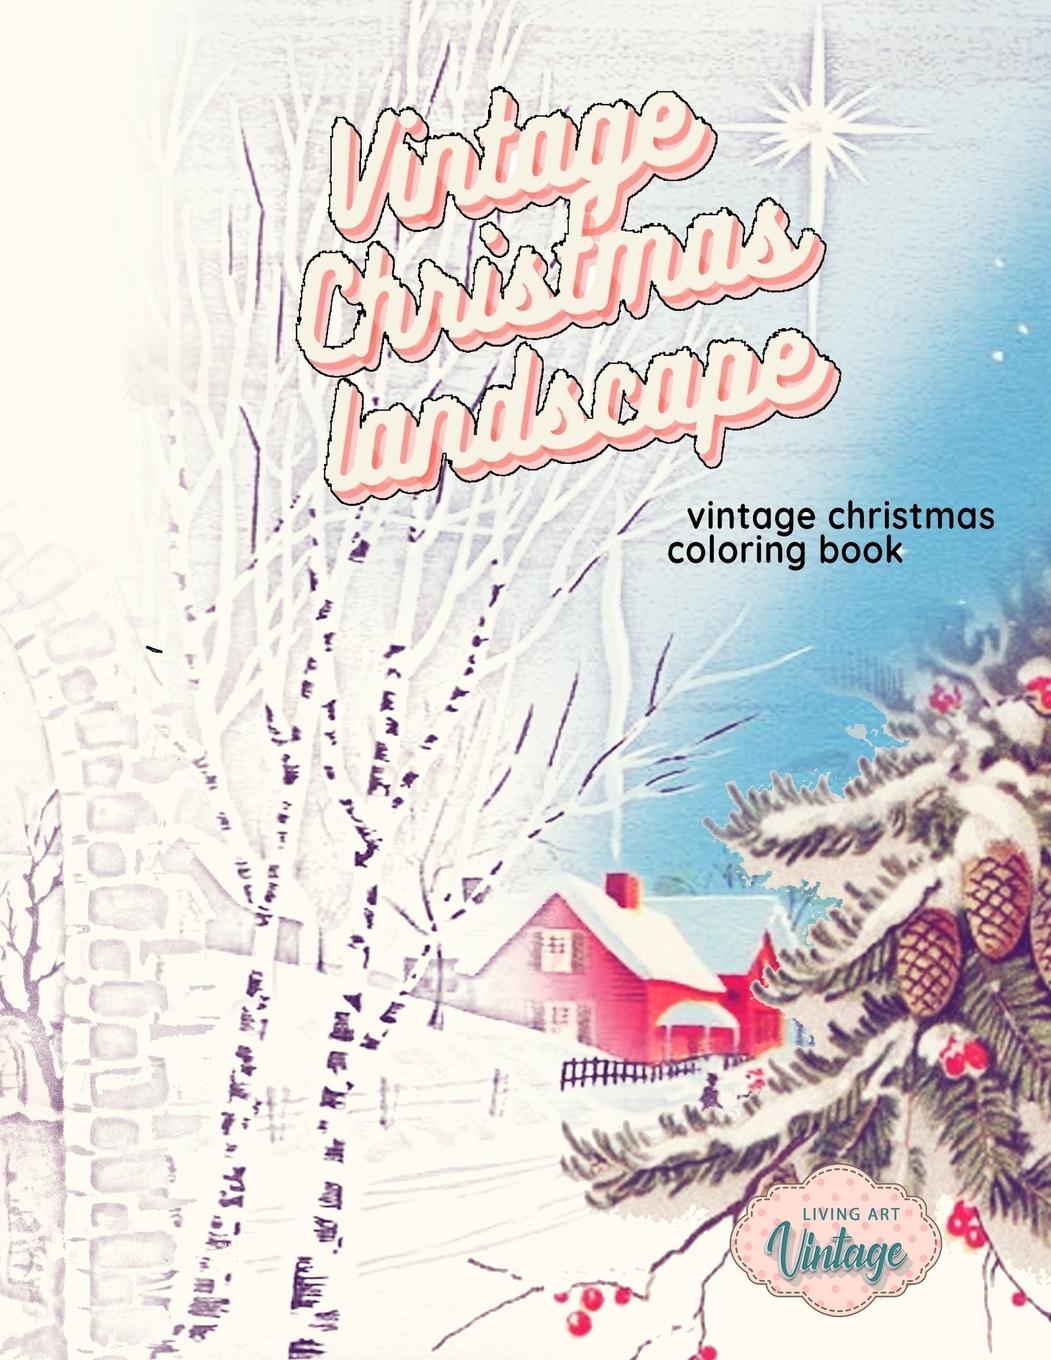 Книга VINTAGE CHRISTMAS LANDSCAPE vintage Christmas coloring book LIVING ART VINTAGE